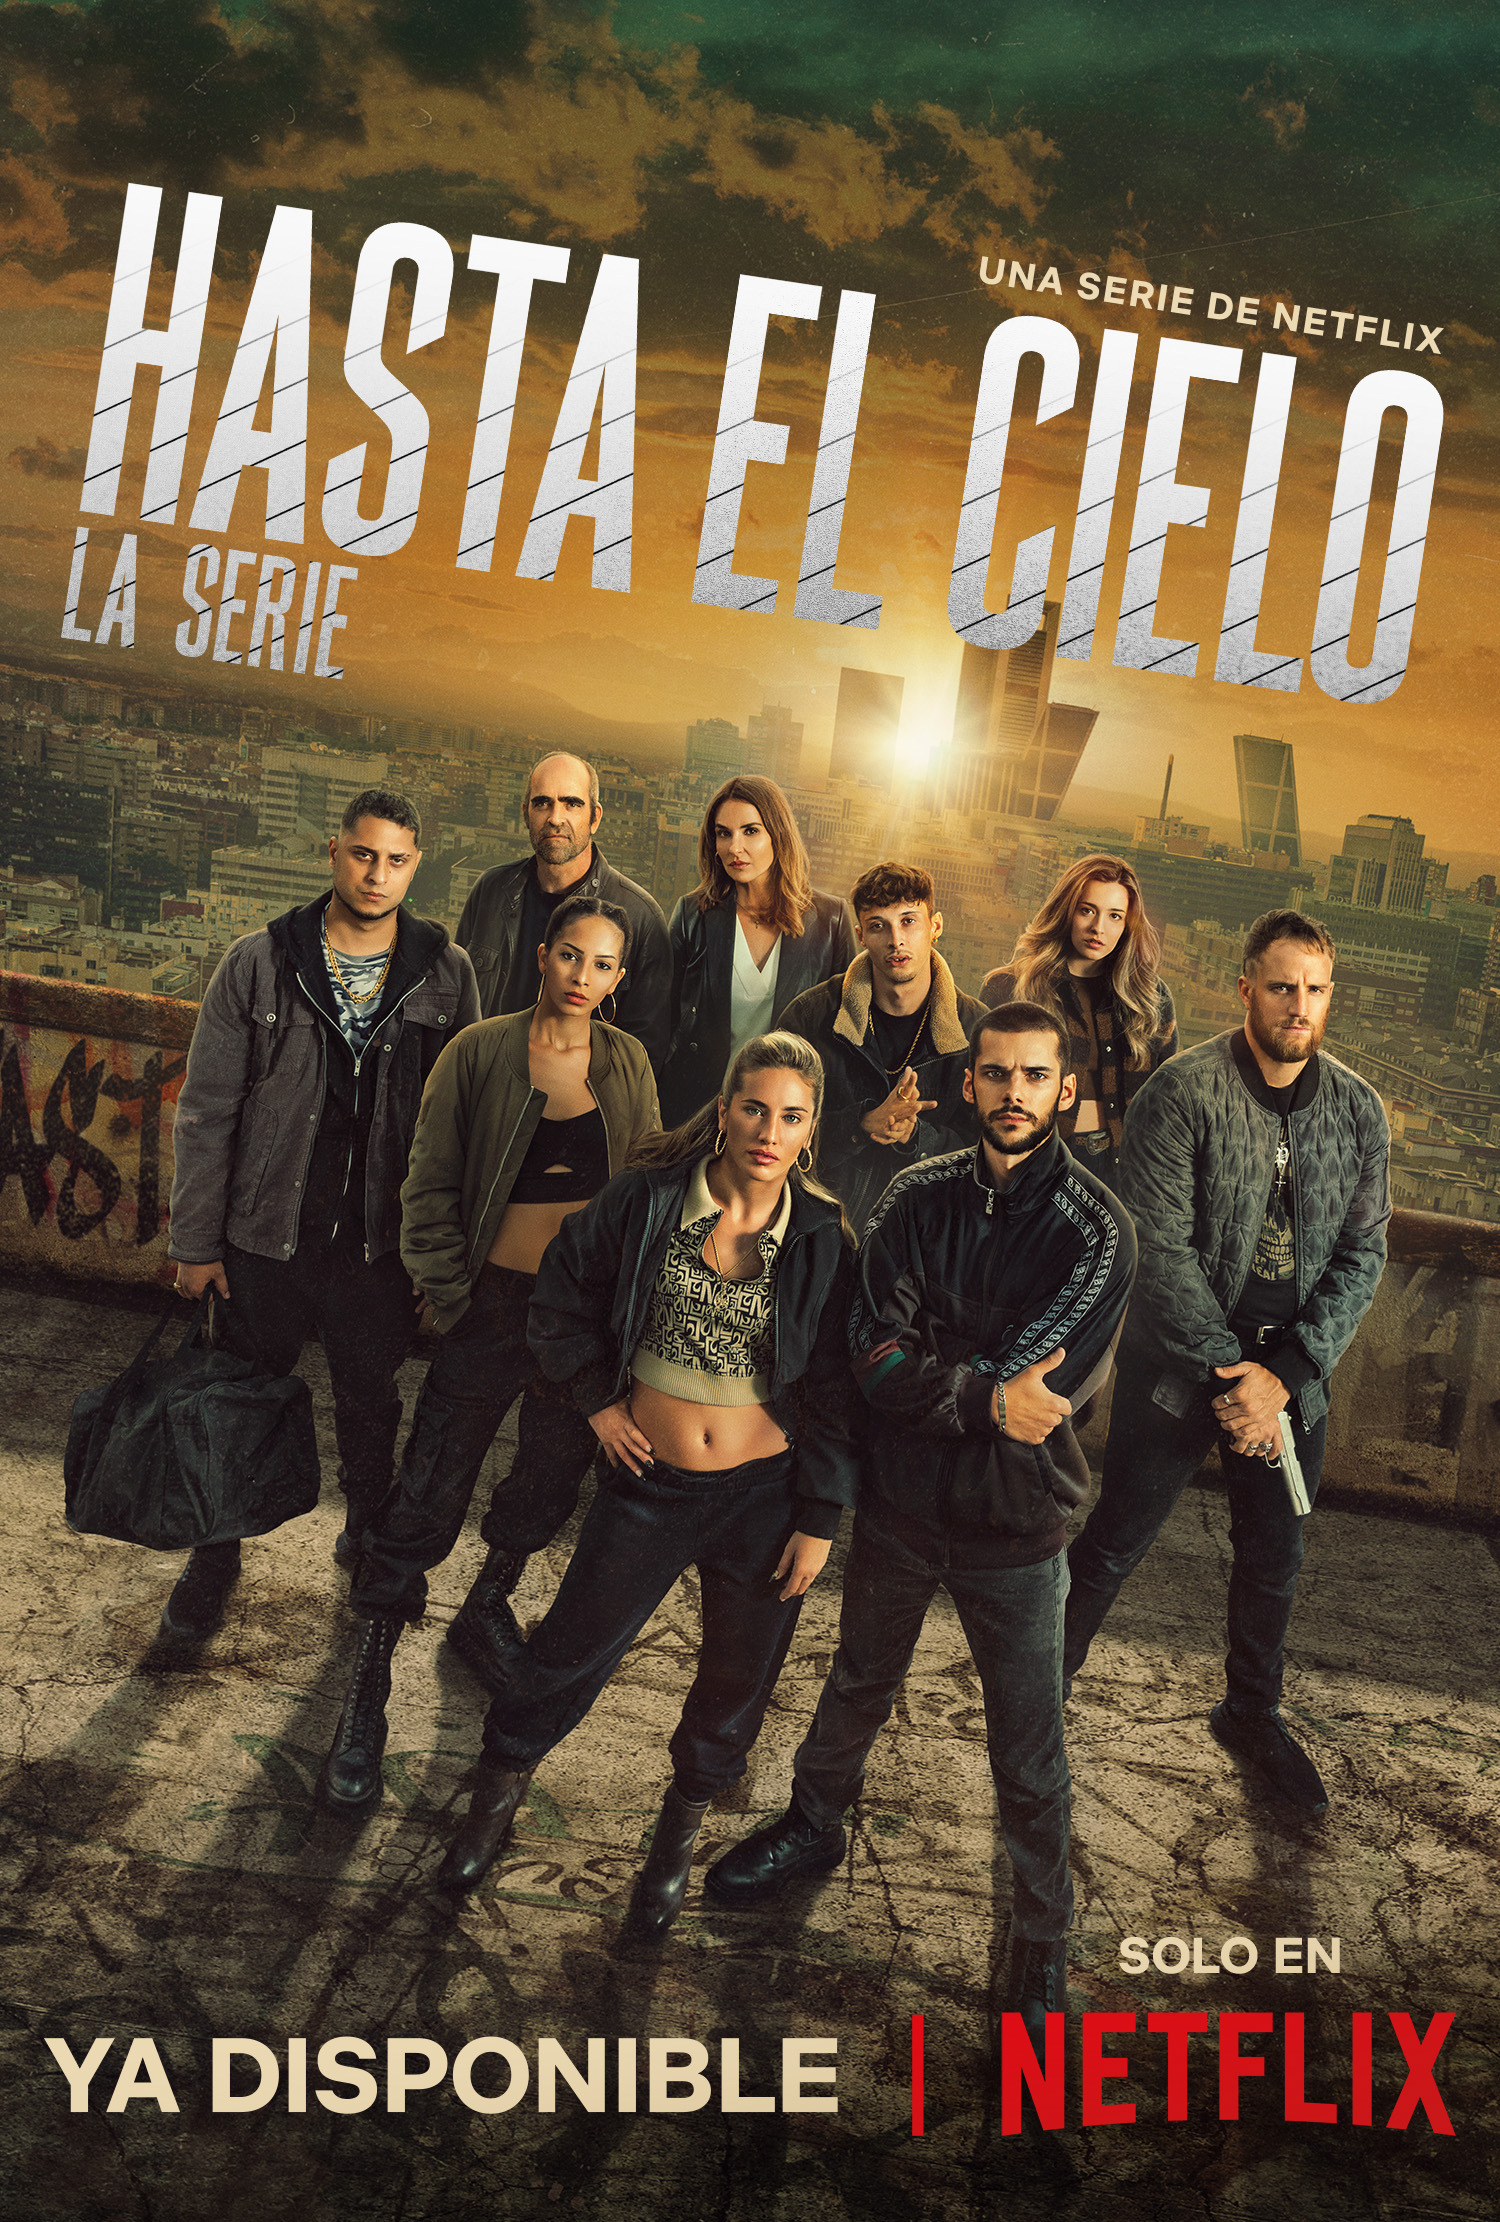 Mega Sized TV Poster Image for Hasta el cielo: La serie (#1 of 7)